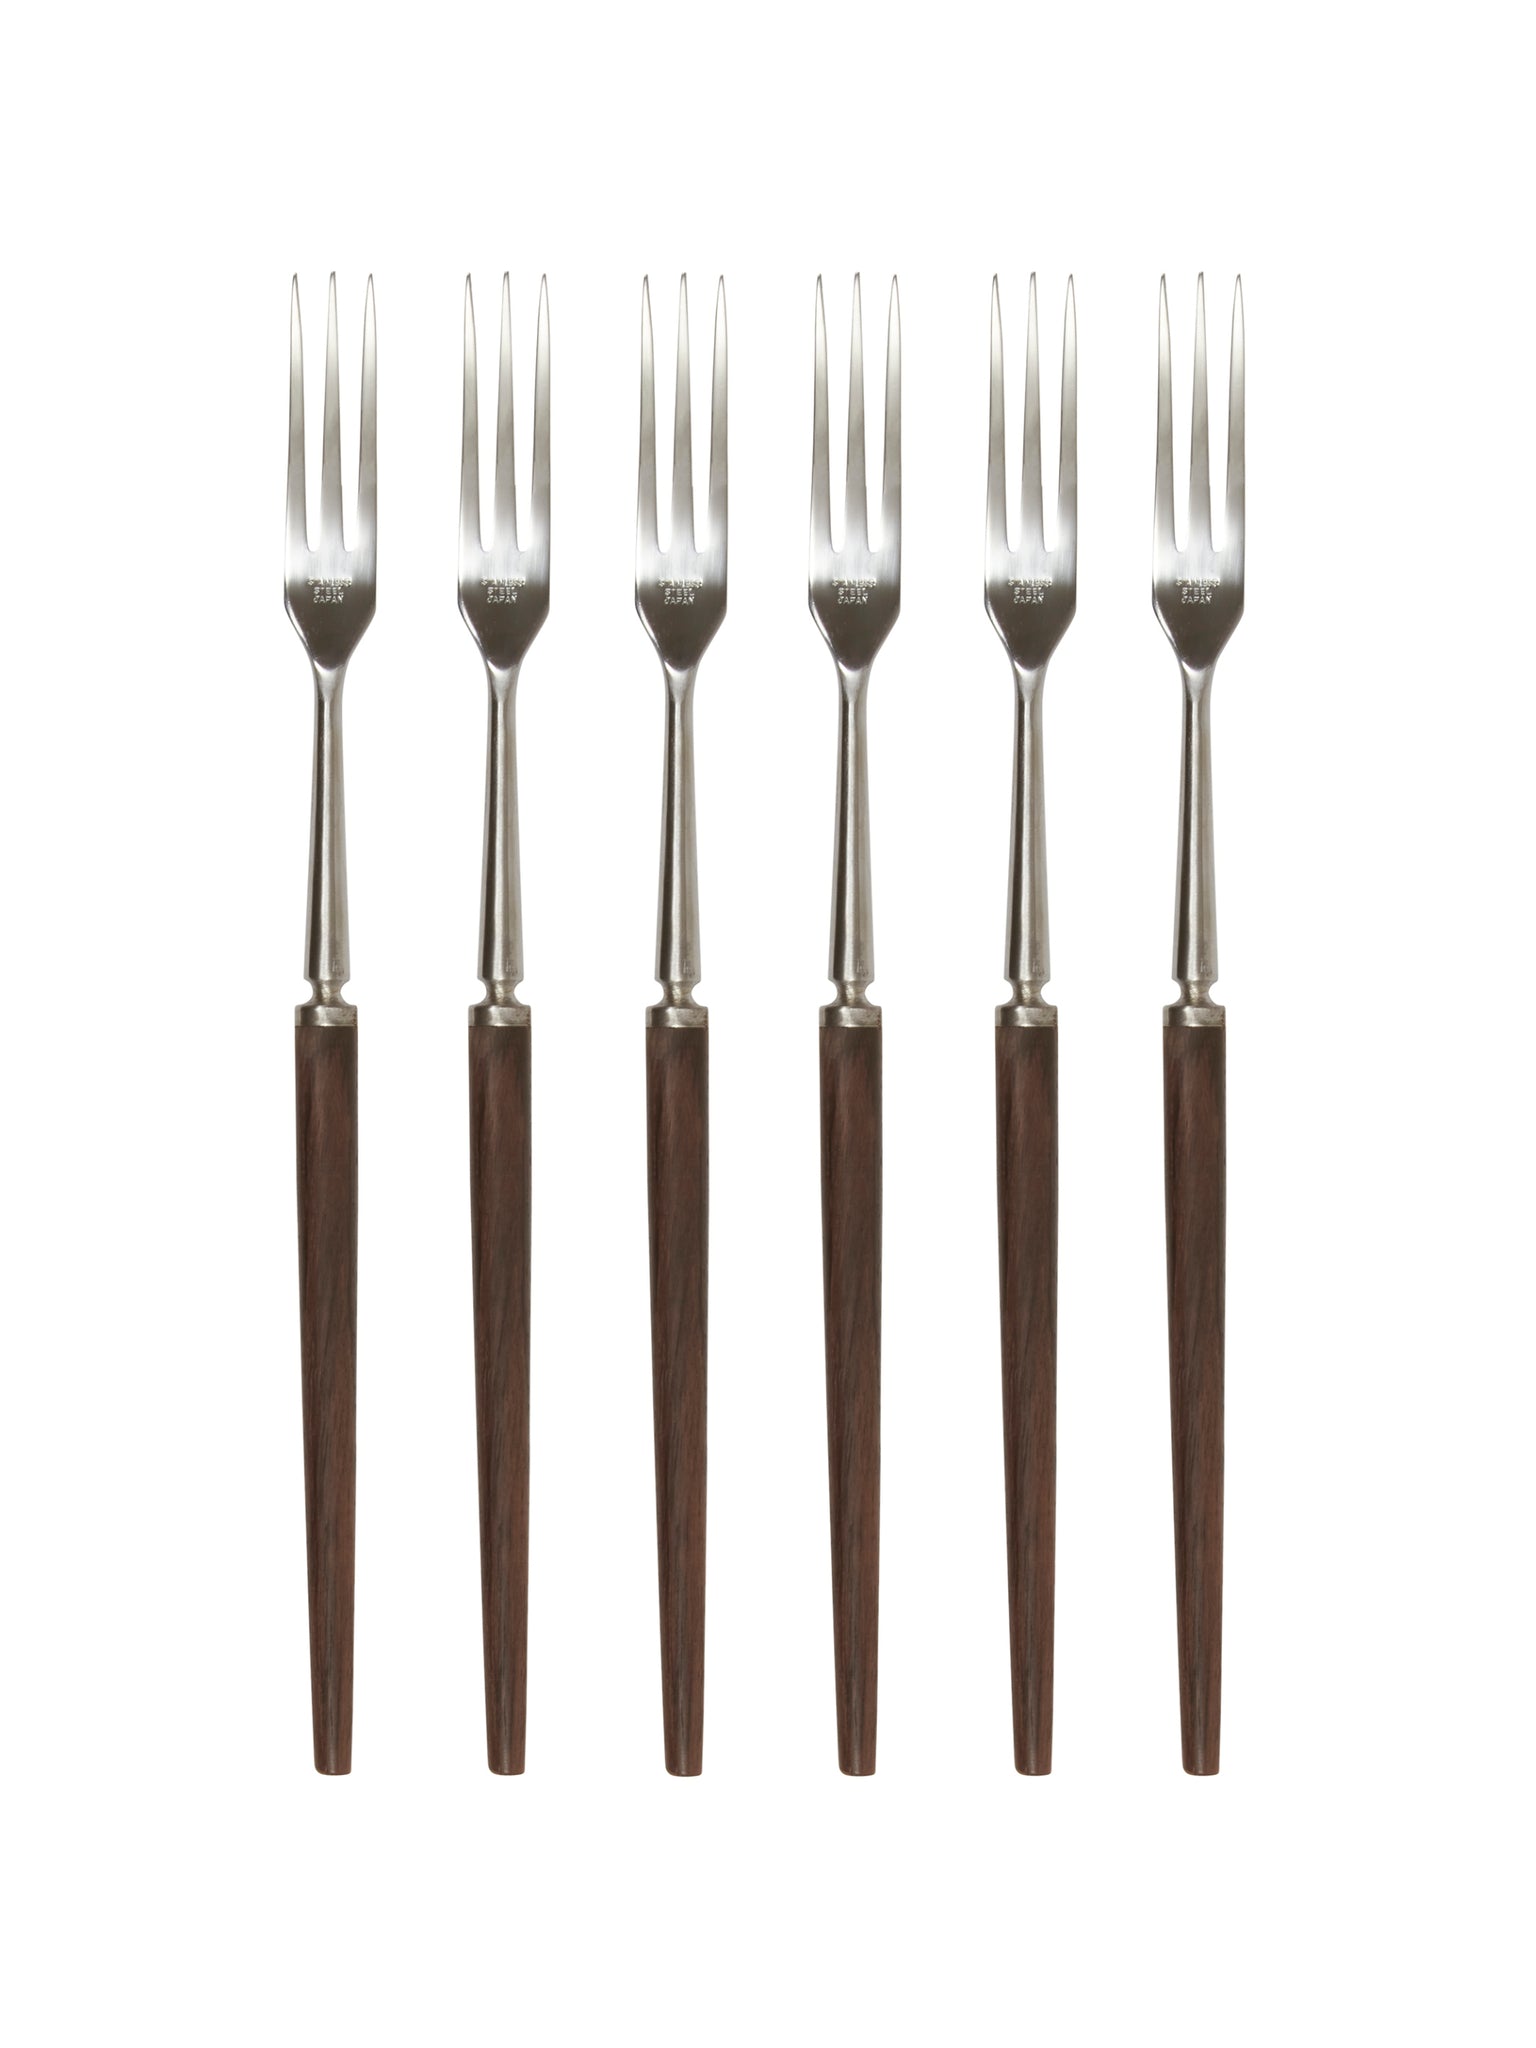 Vintage 1960s Japanese Teak Handled Long Forks Set of Six Weston Table